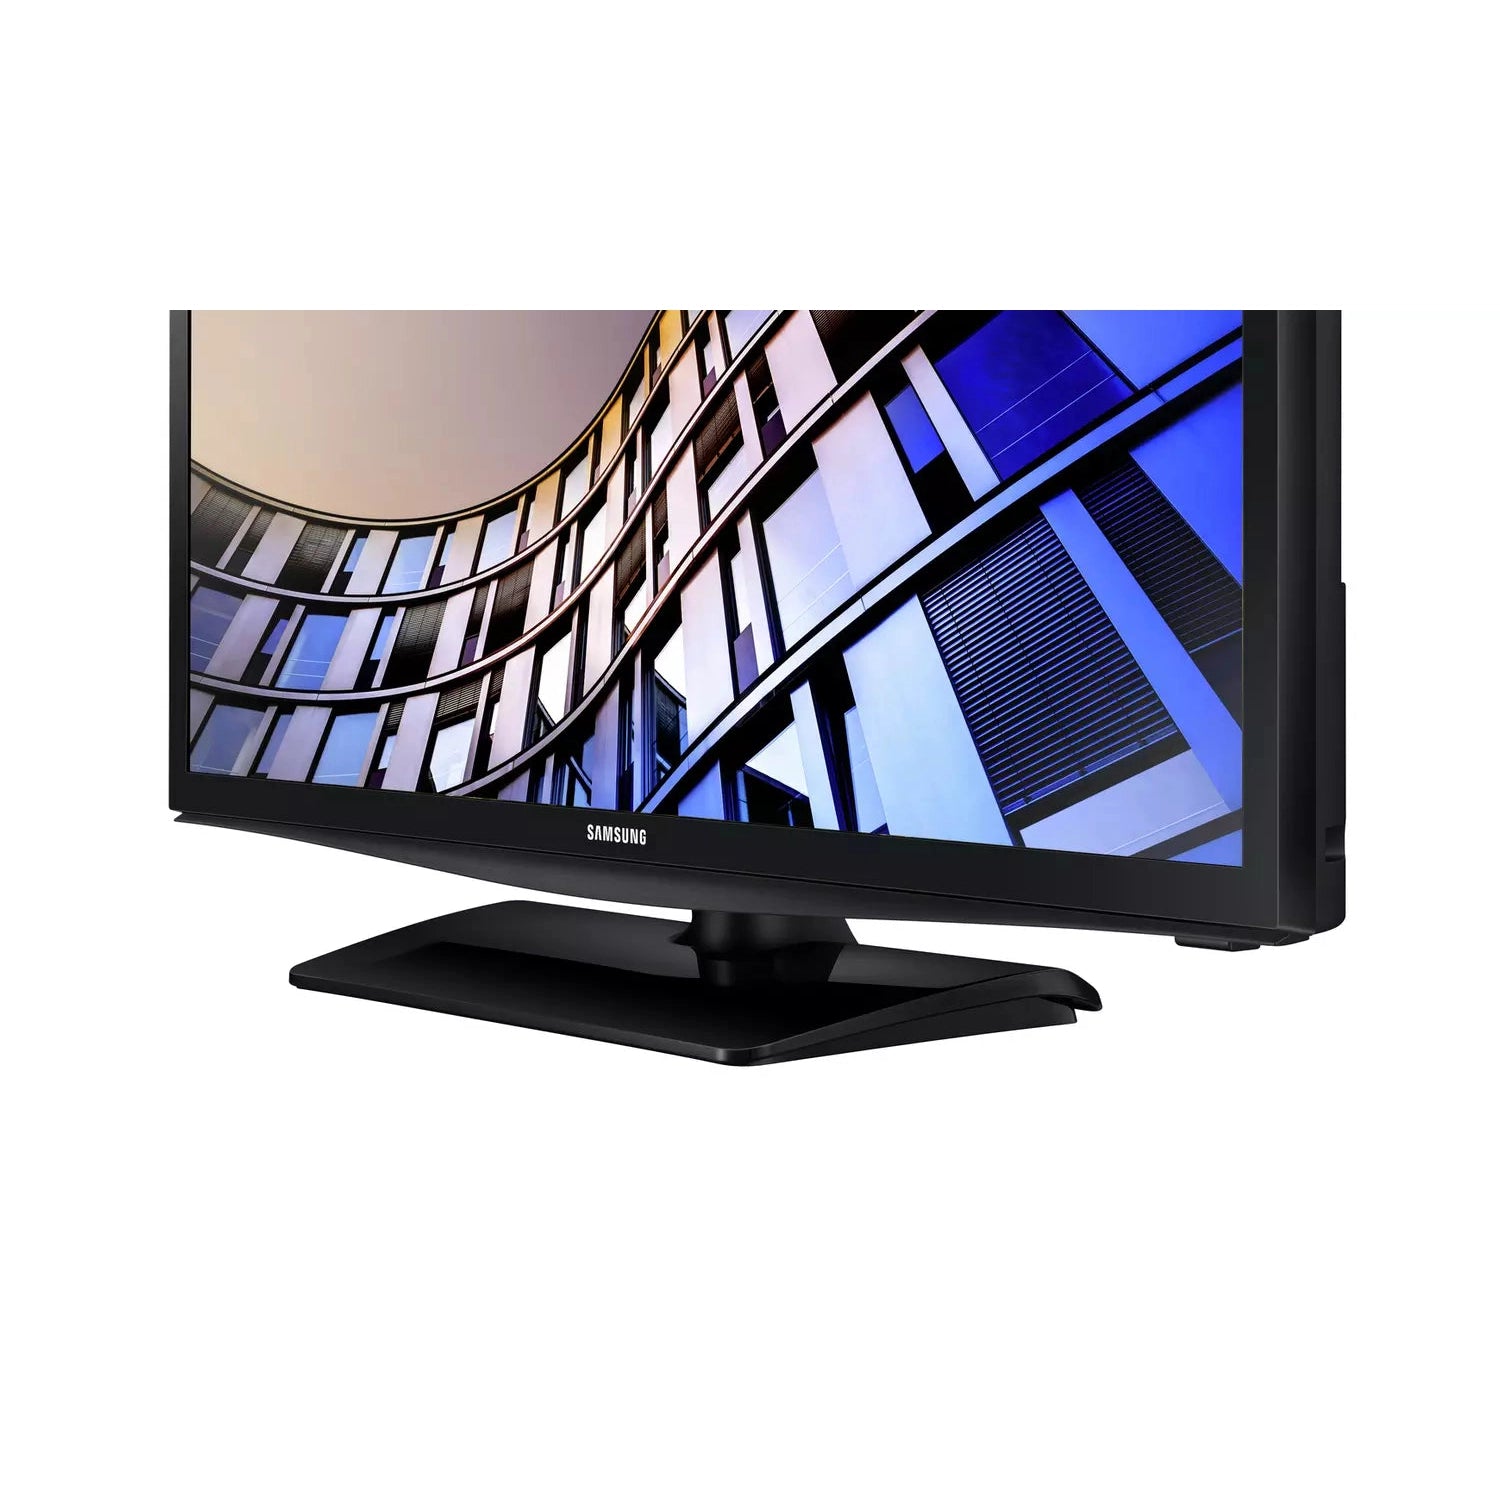 Samsung 24 Inch UE24N4300 Smart HD Ready TV - Refurbished Pristine